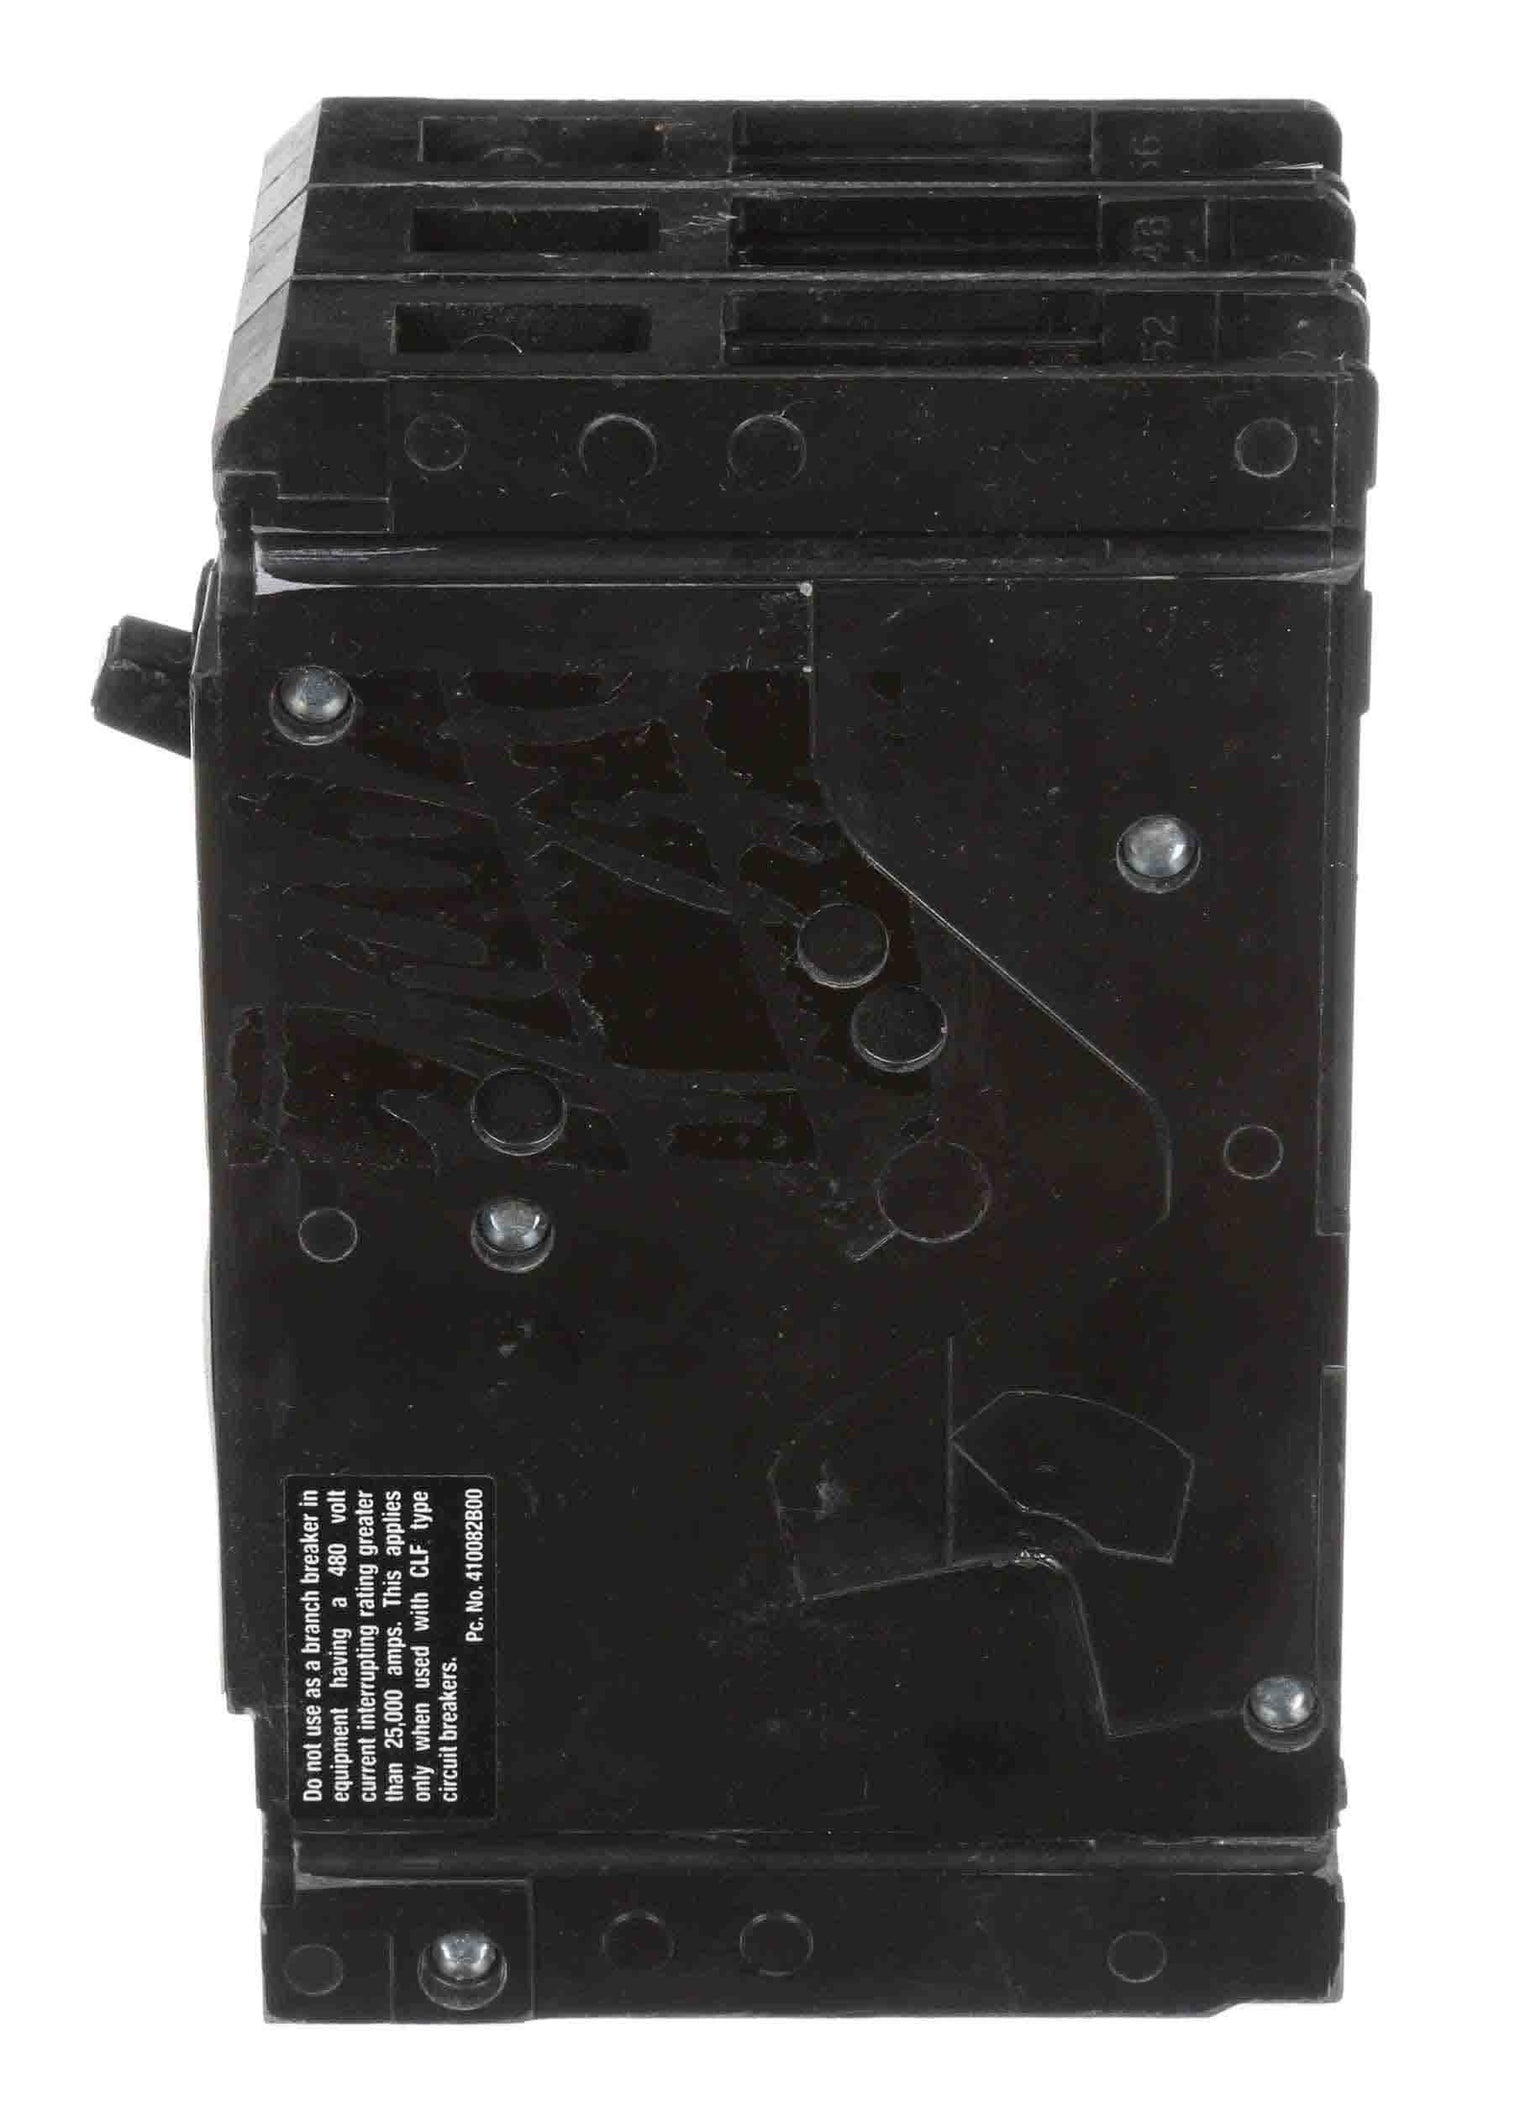 ED63B100L - Siemens - Molded Case Circuit Breaker